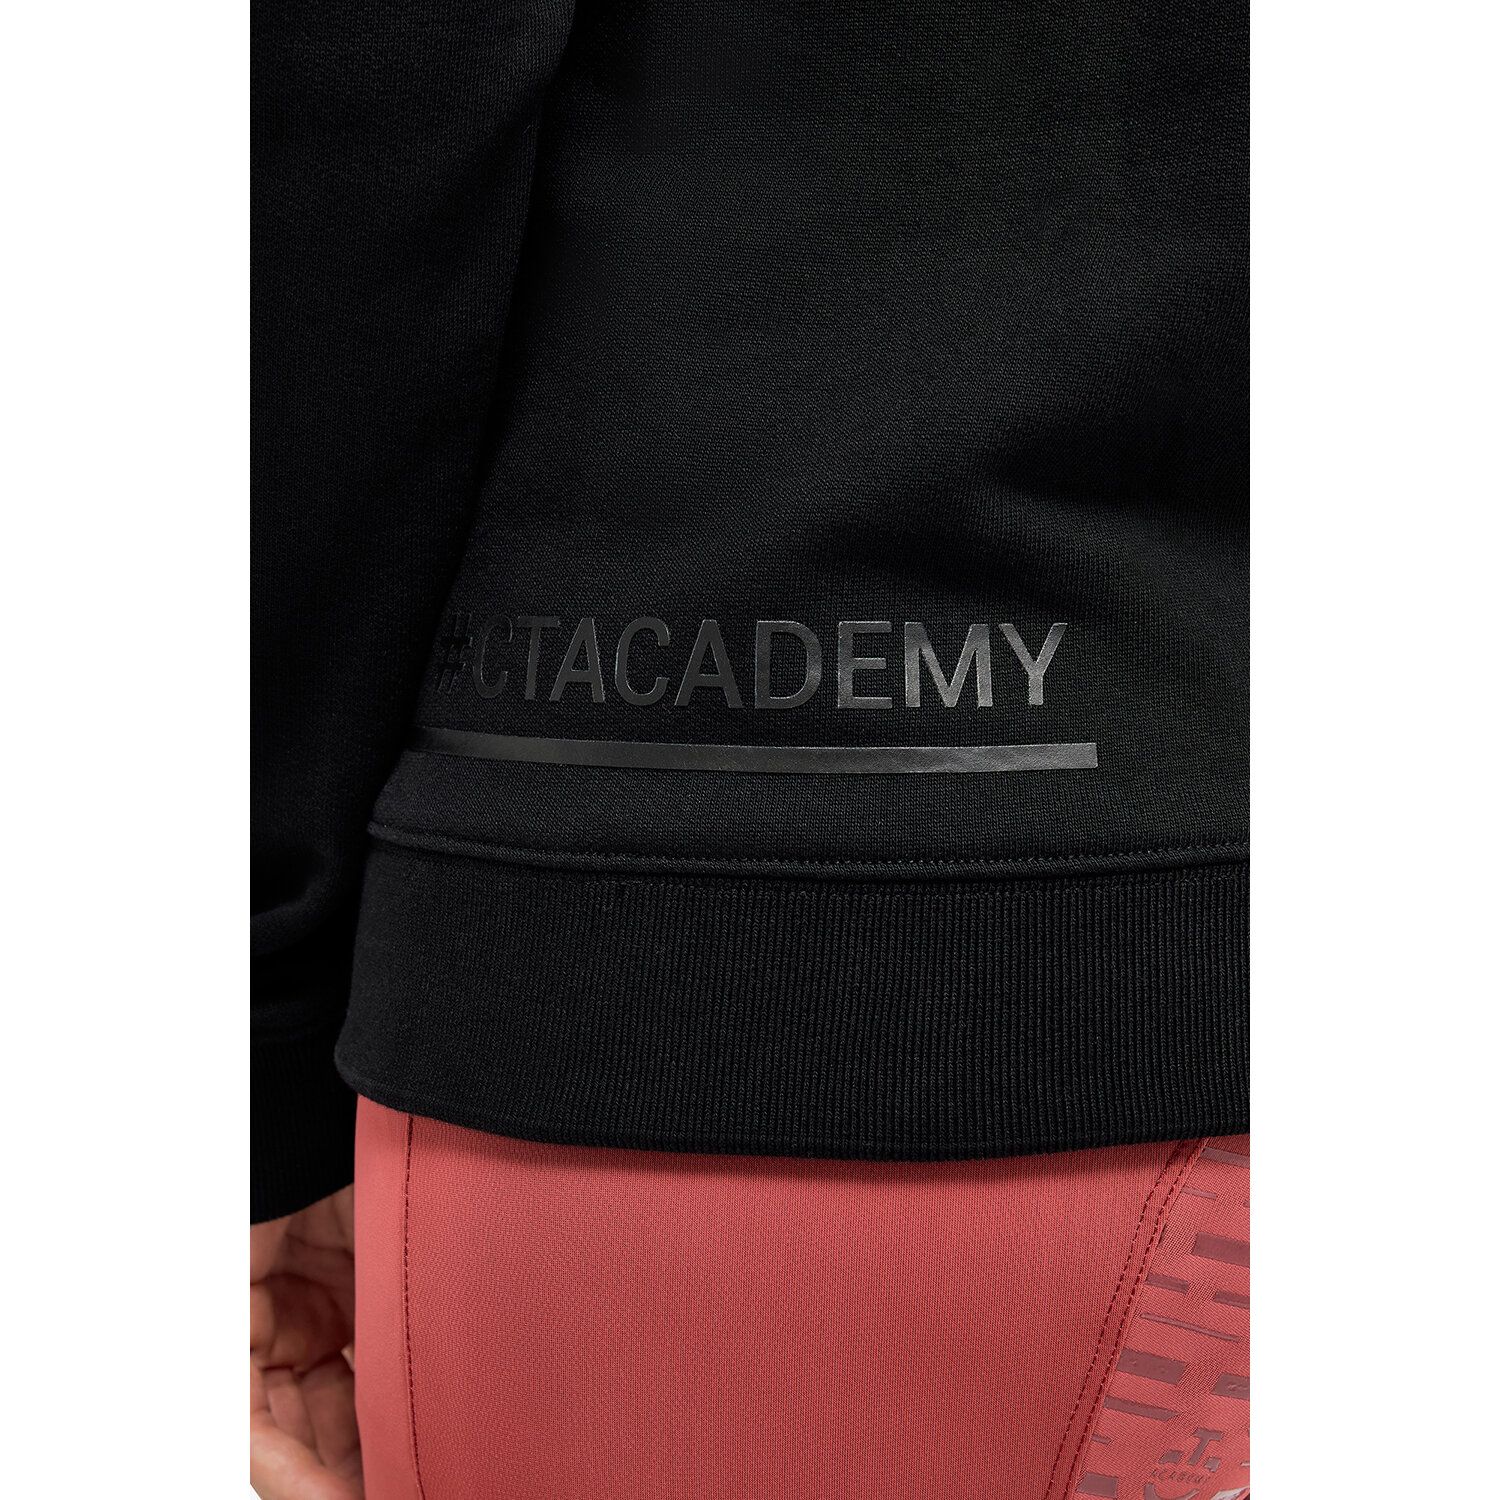 Cavalleria Toscana CT Academy women's cotton sweatshirt BLACK-6